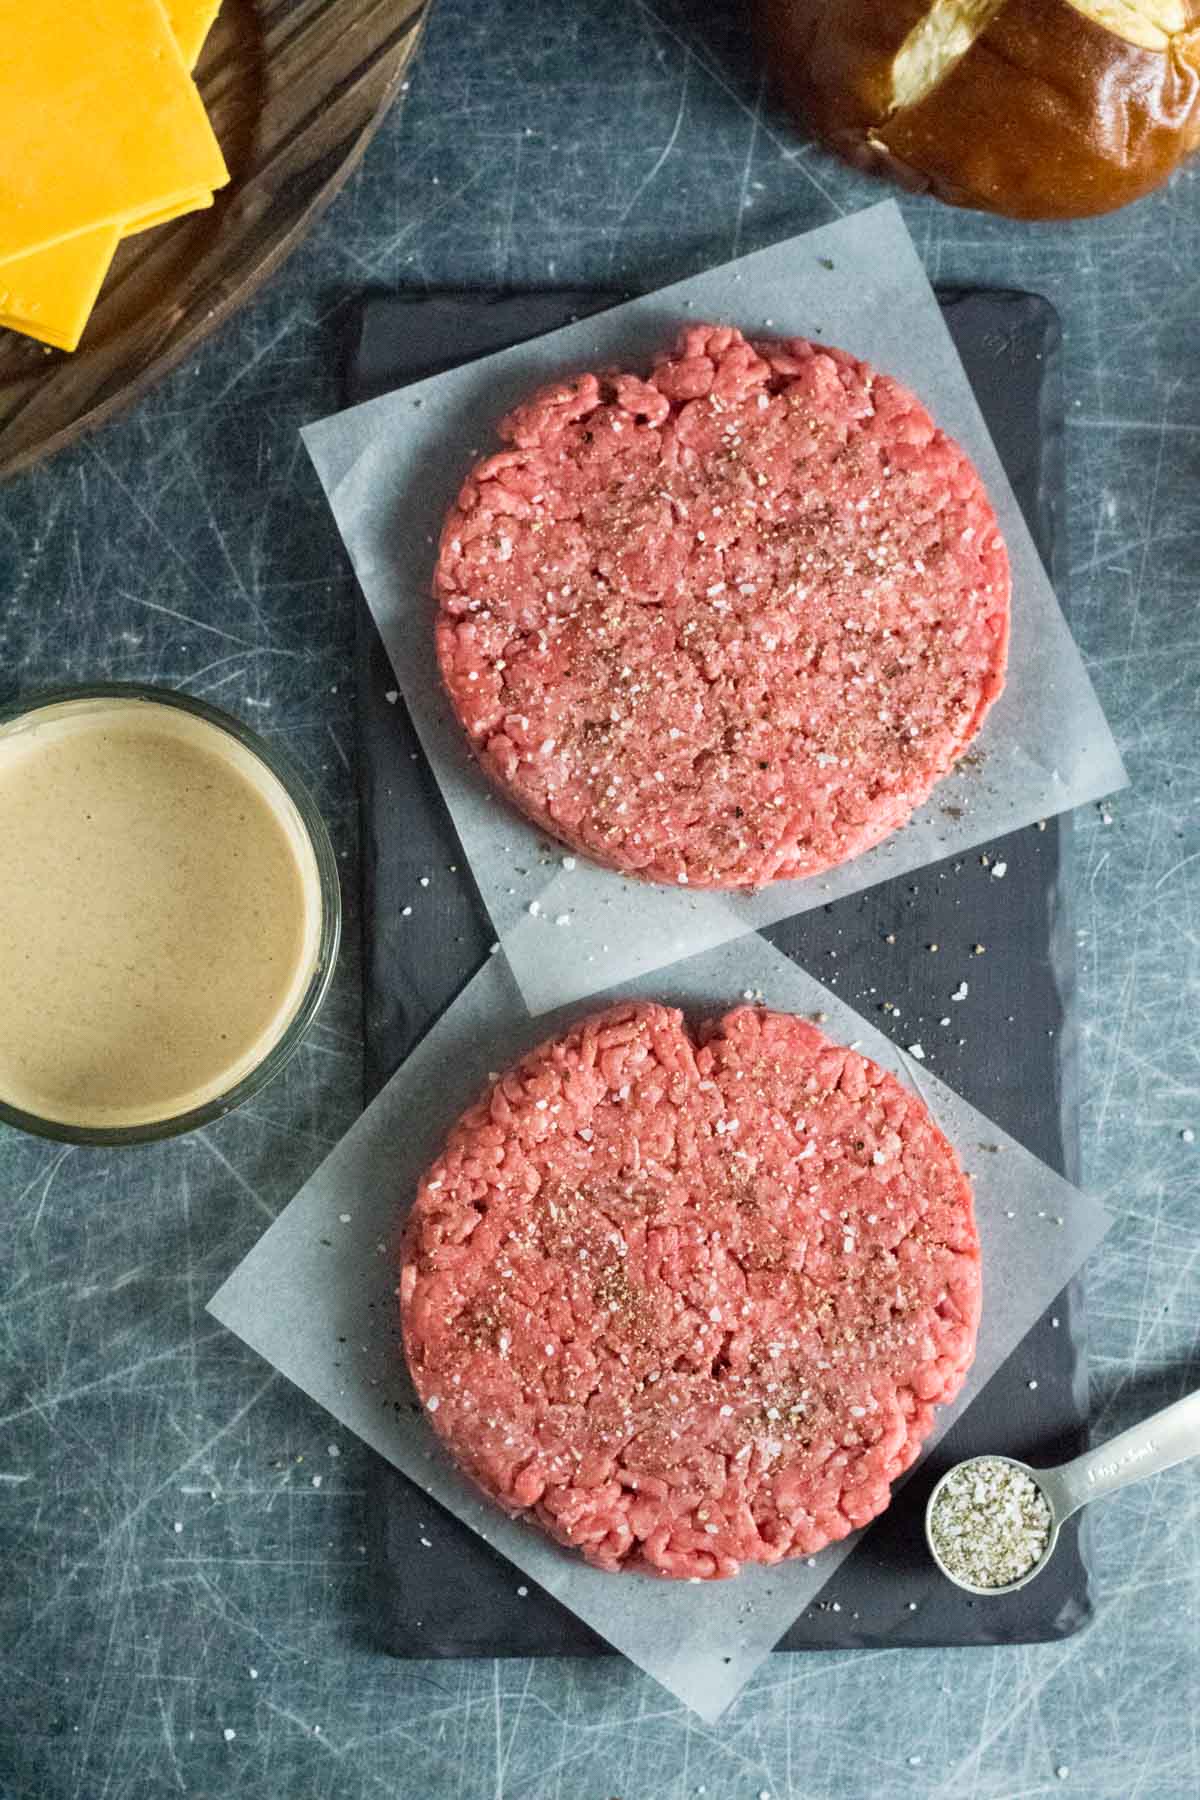 Forming raw hamburger patties.